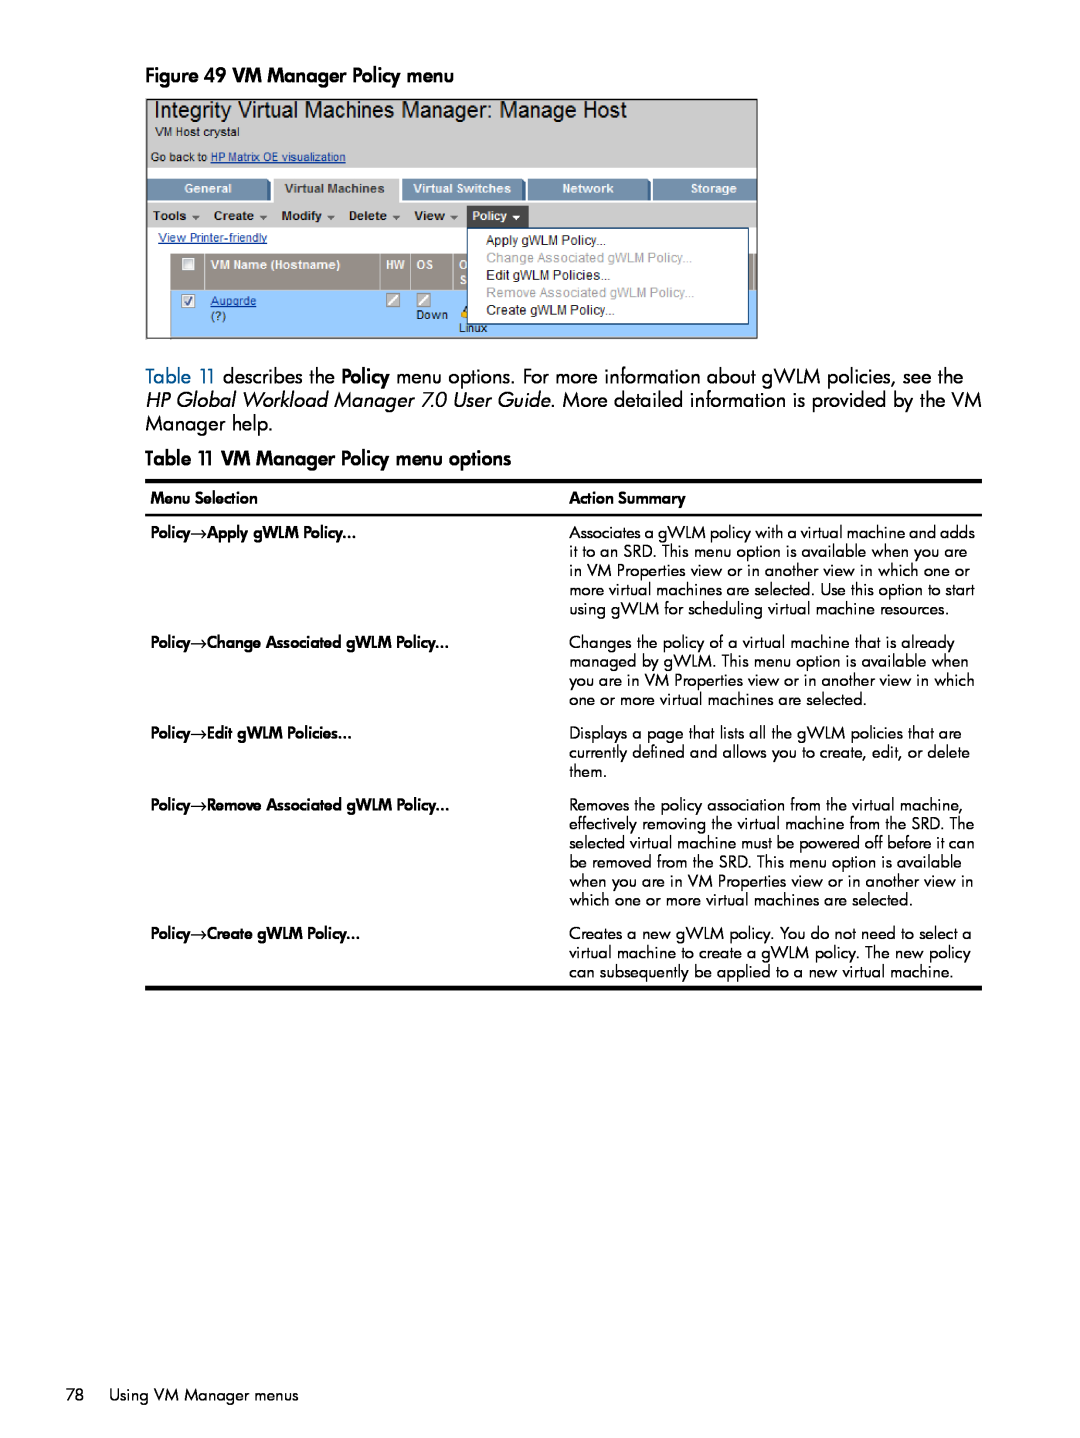 HP UX vPars and Integrity VM v6 manual VM Manager Policy menu options 